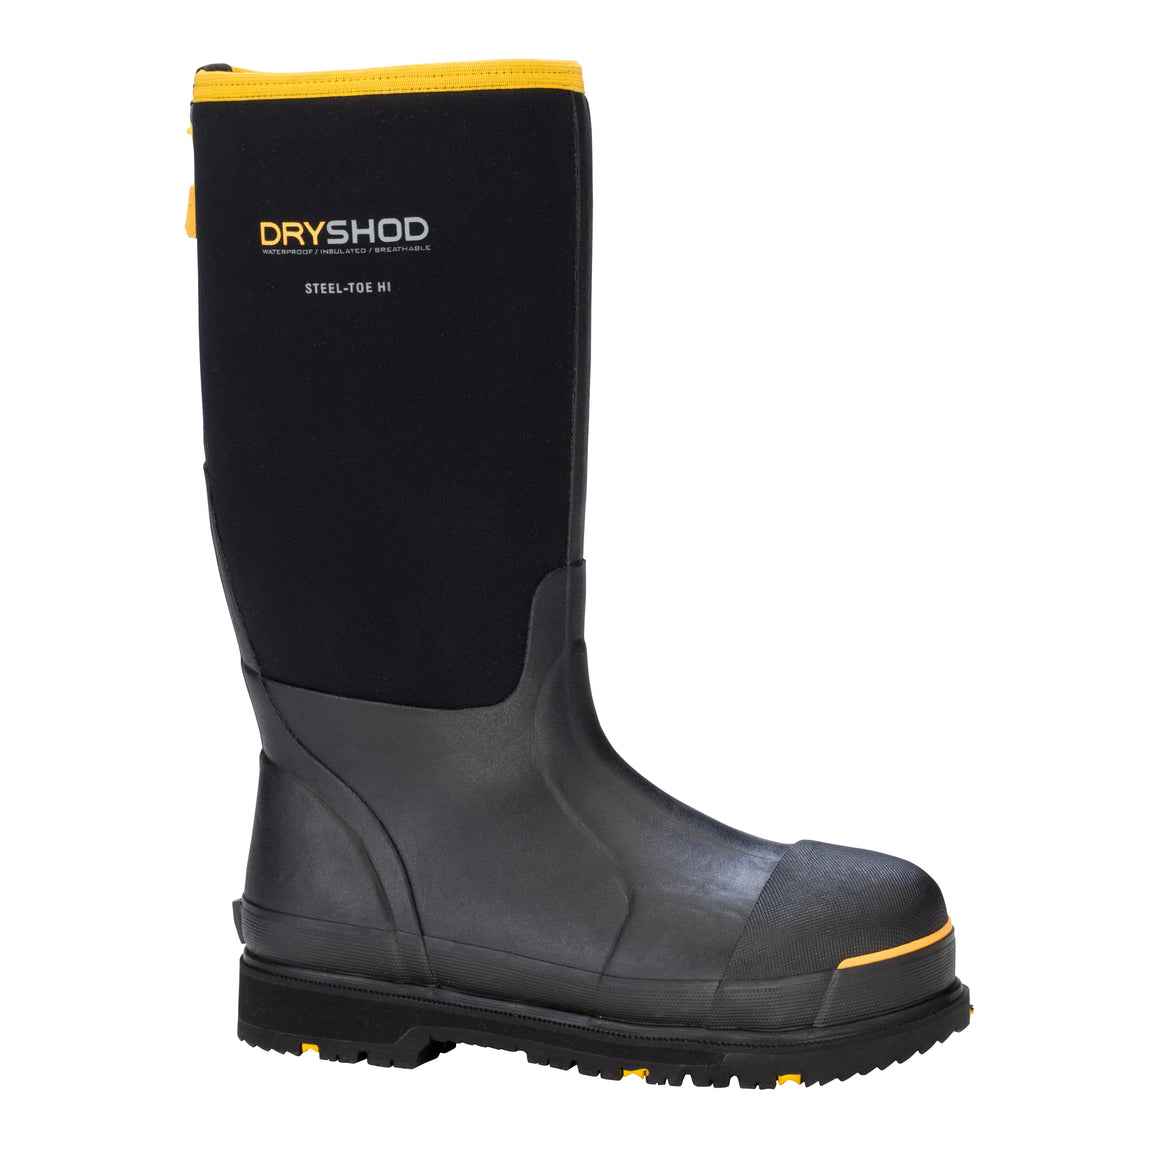 Dryshod Men's Steel-Toe Work Boot - Black/Yellow STT-UH-BK